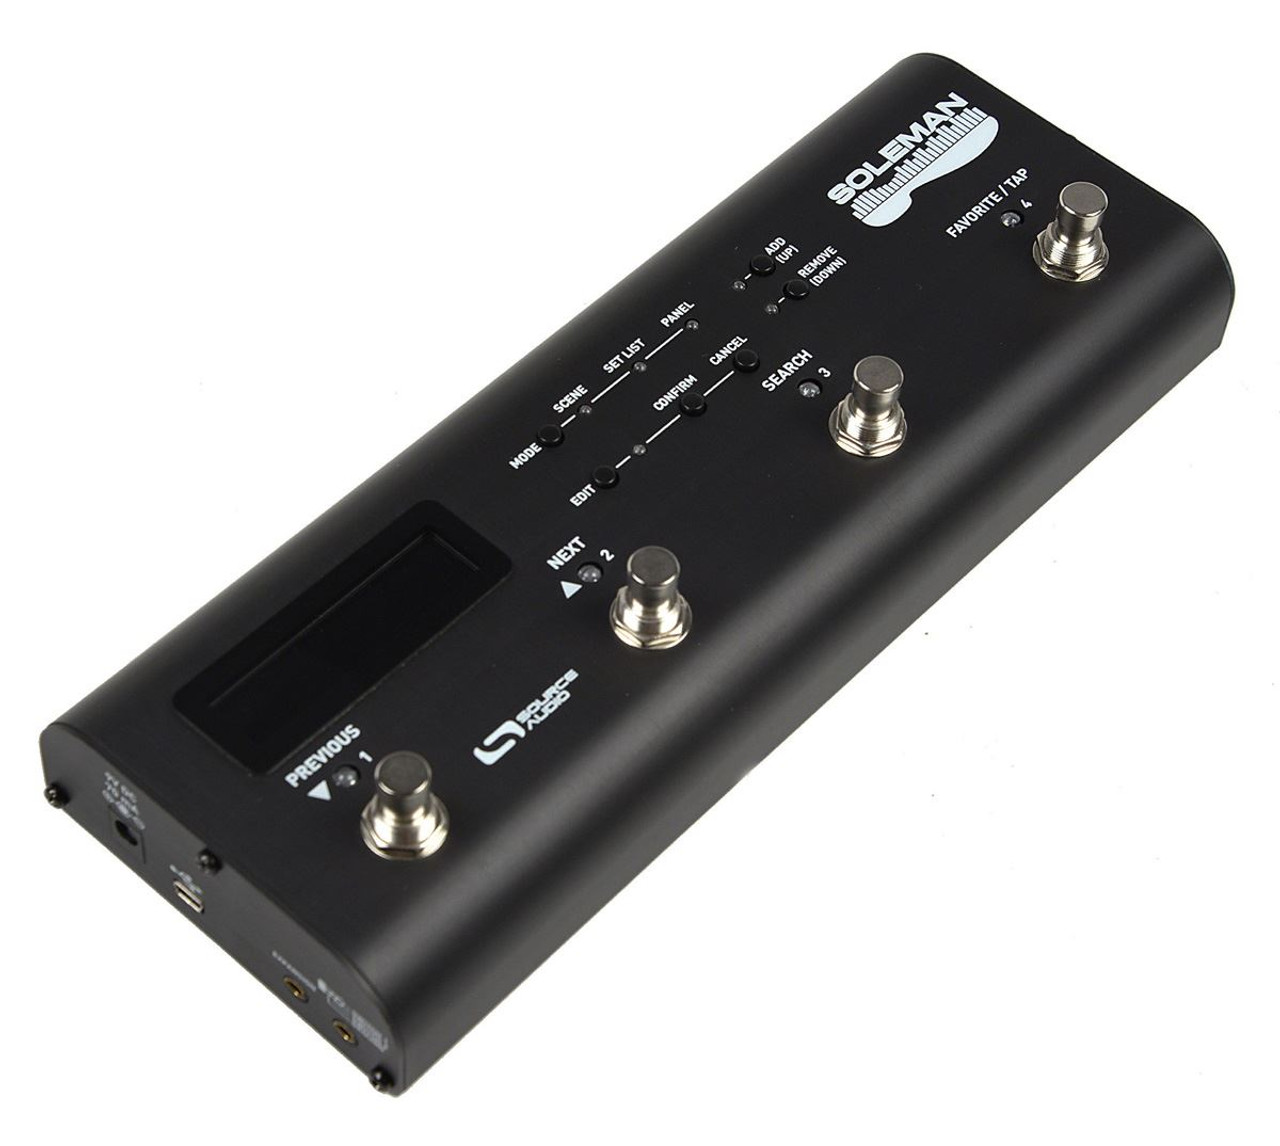 Source Audio Soleman MIDI Foot Controller